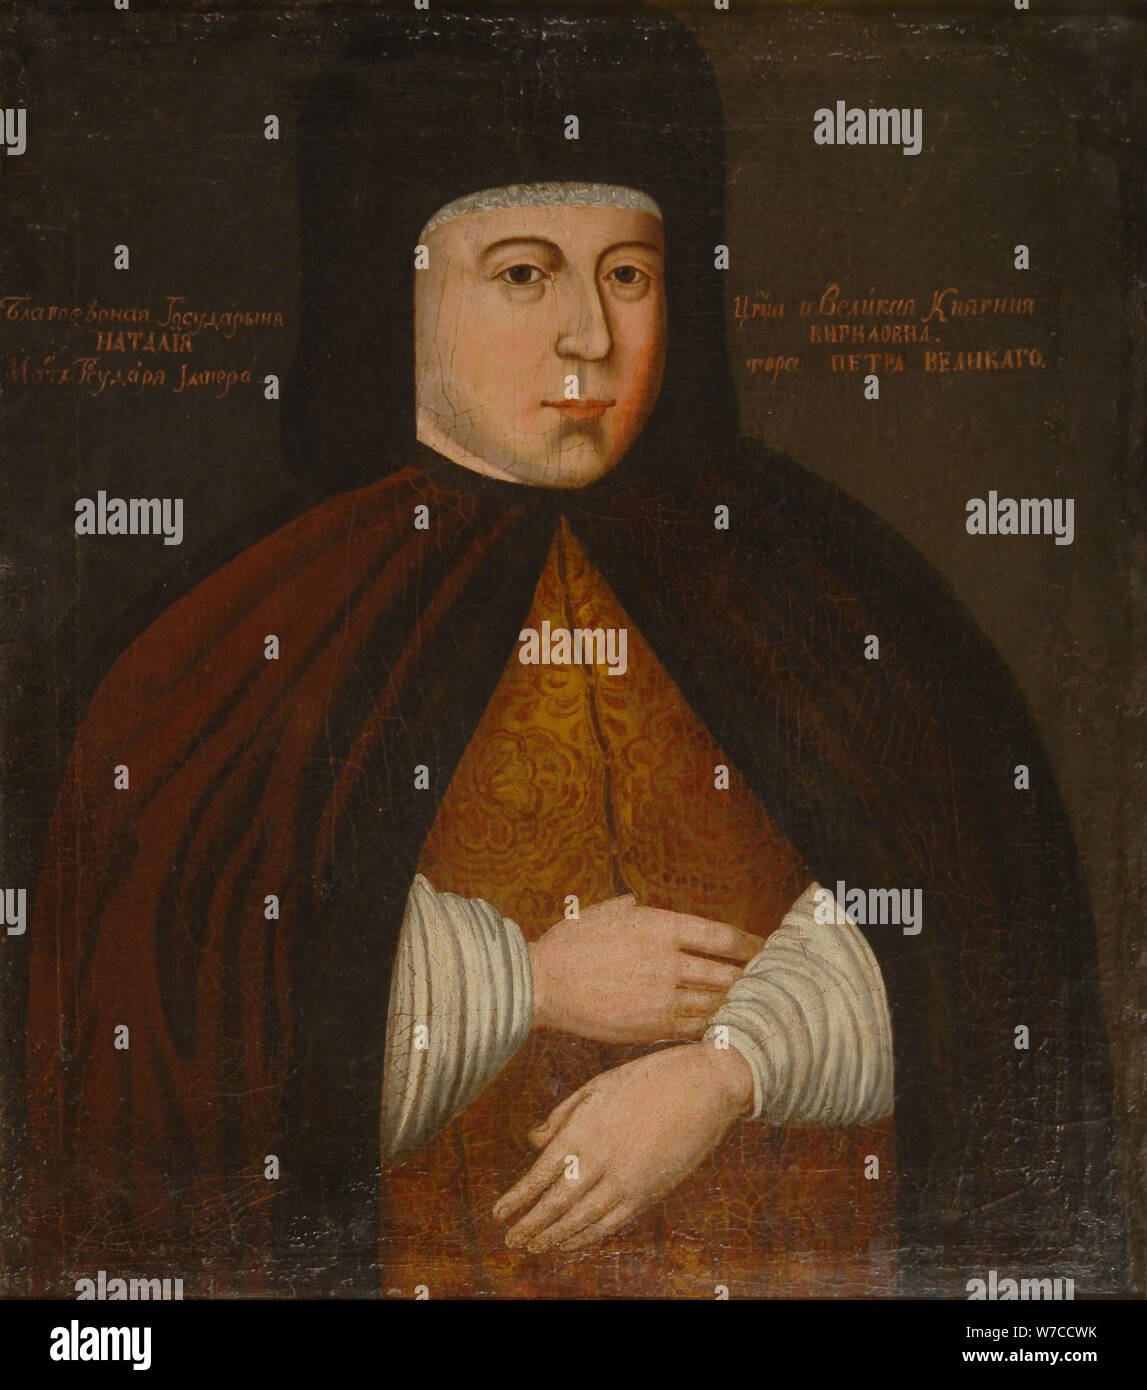 Porträt der Zarin Natalia Naryshkina (1651-1694). Stockfoto